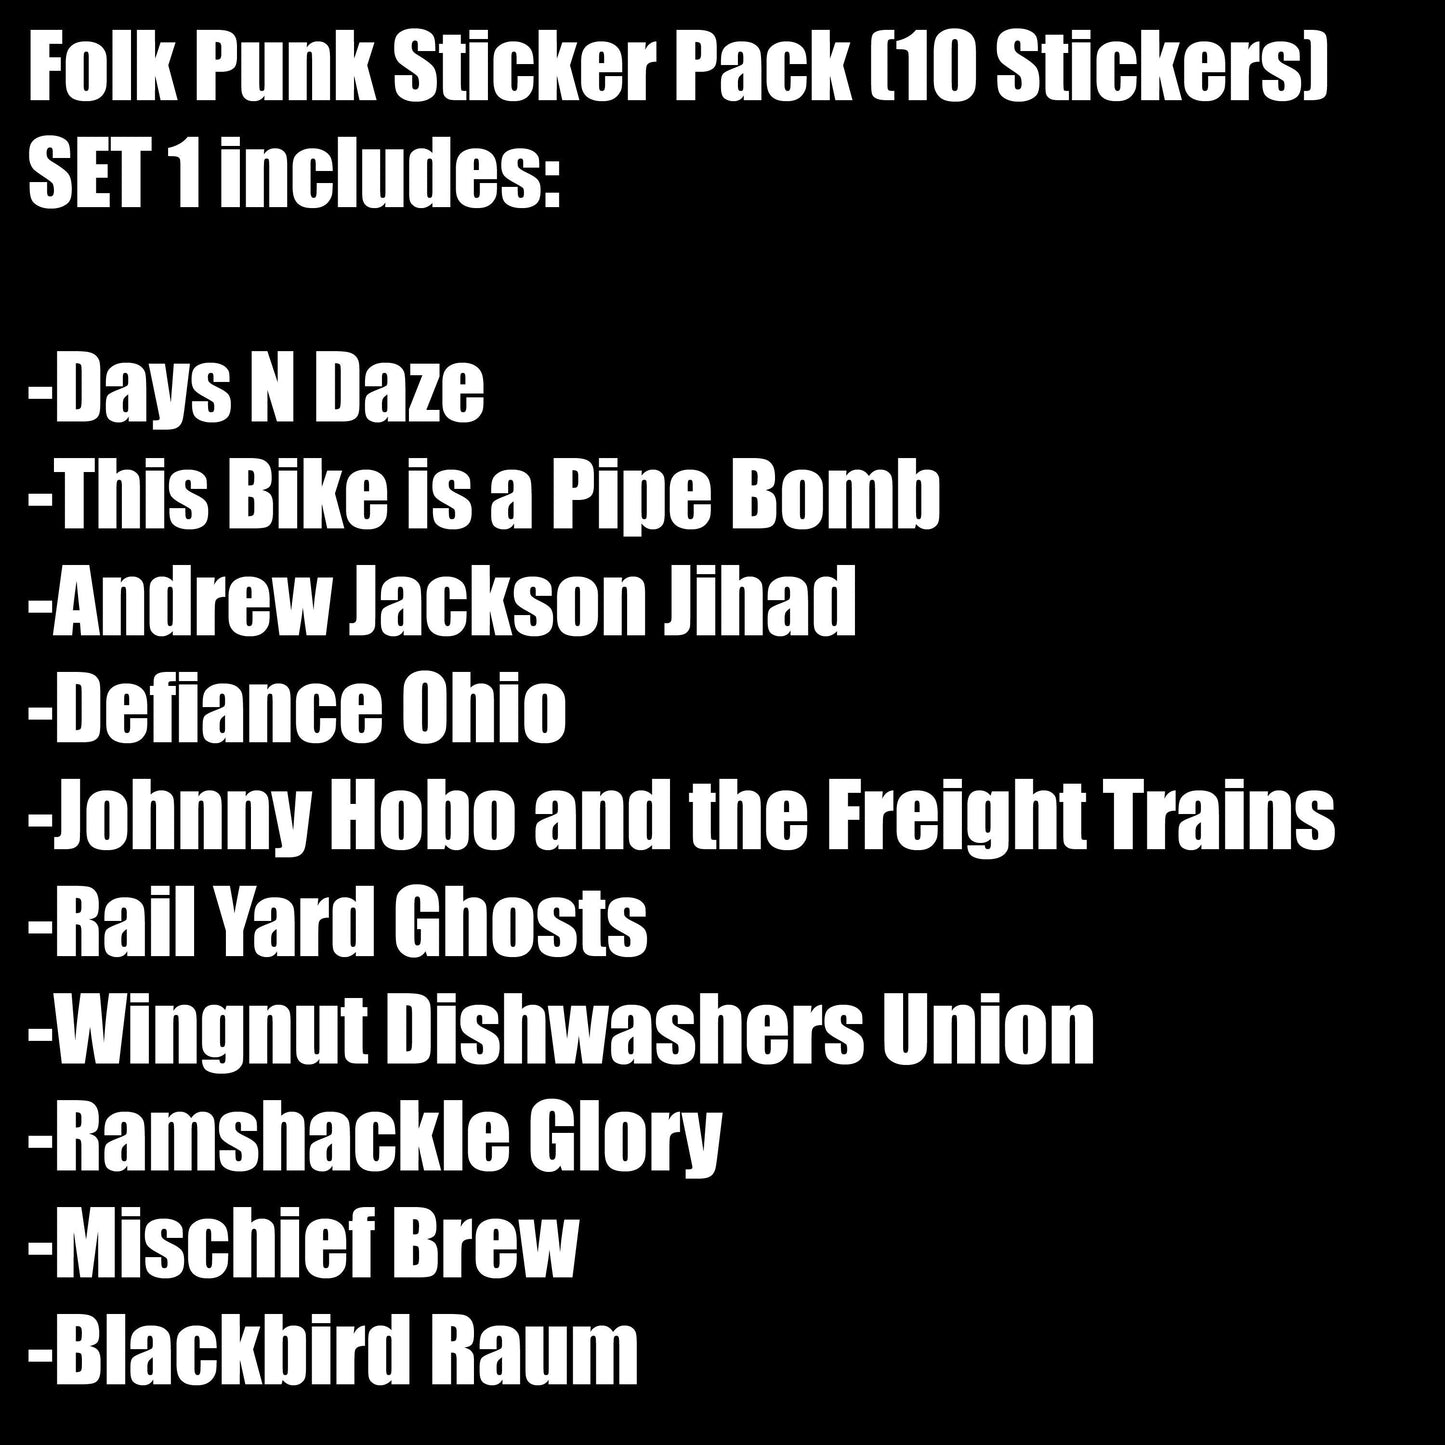 Folk Punk Sticker Pack (10 Stickers) Set 1